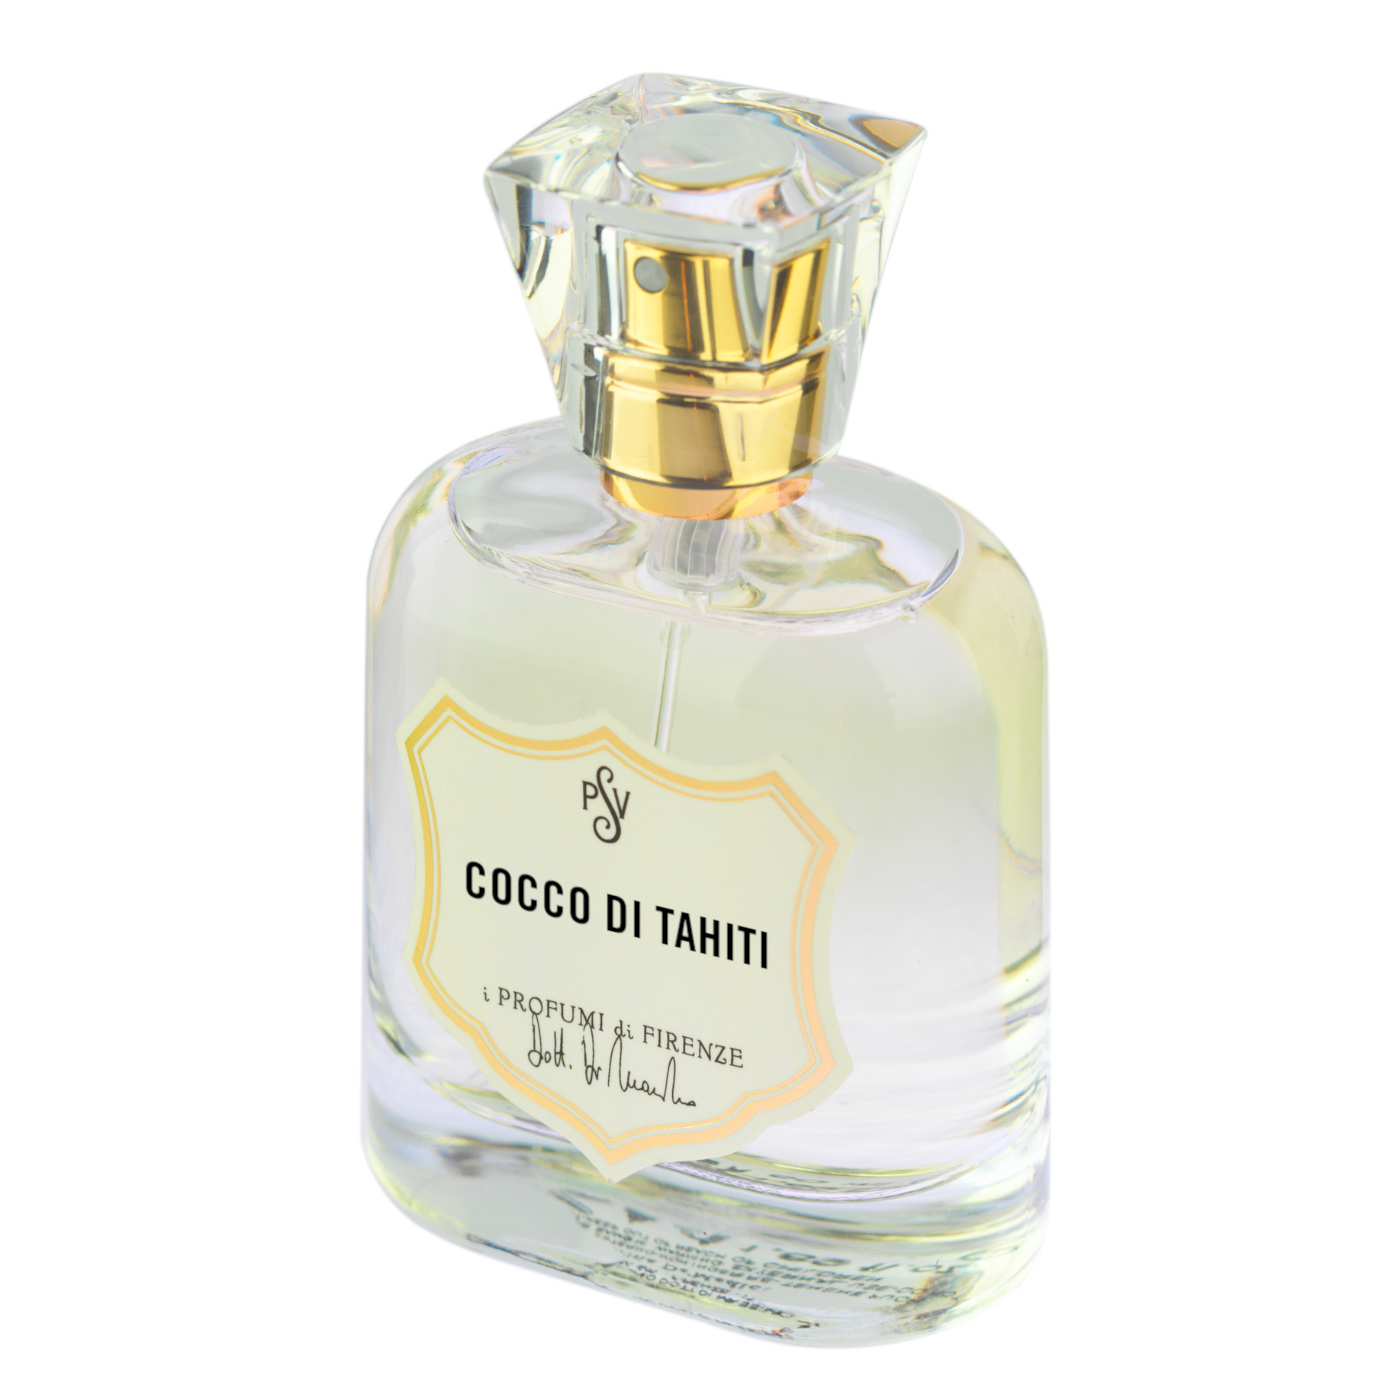 COCCO DI TAHITI - Eau de Parfum